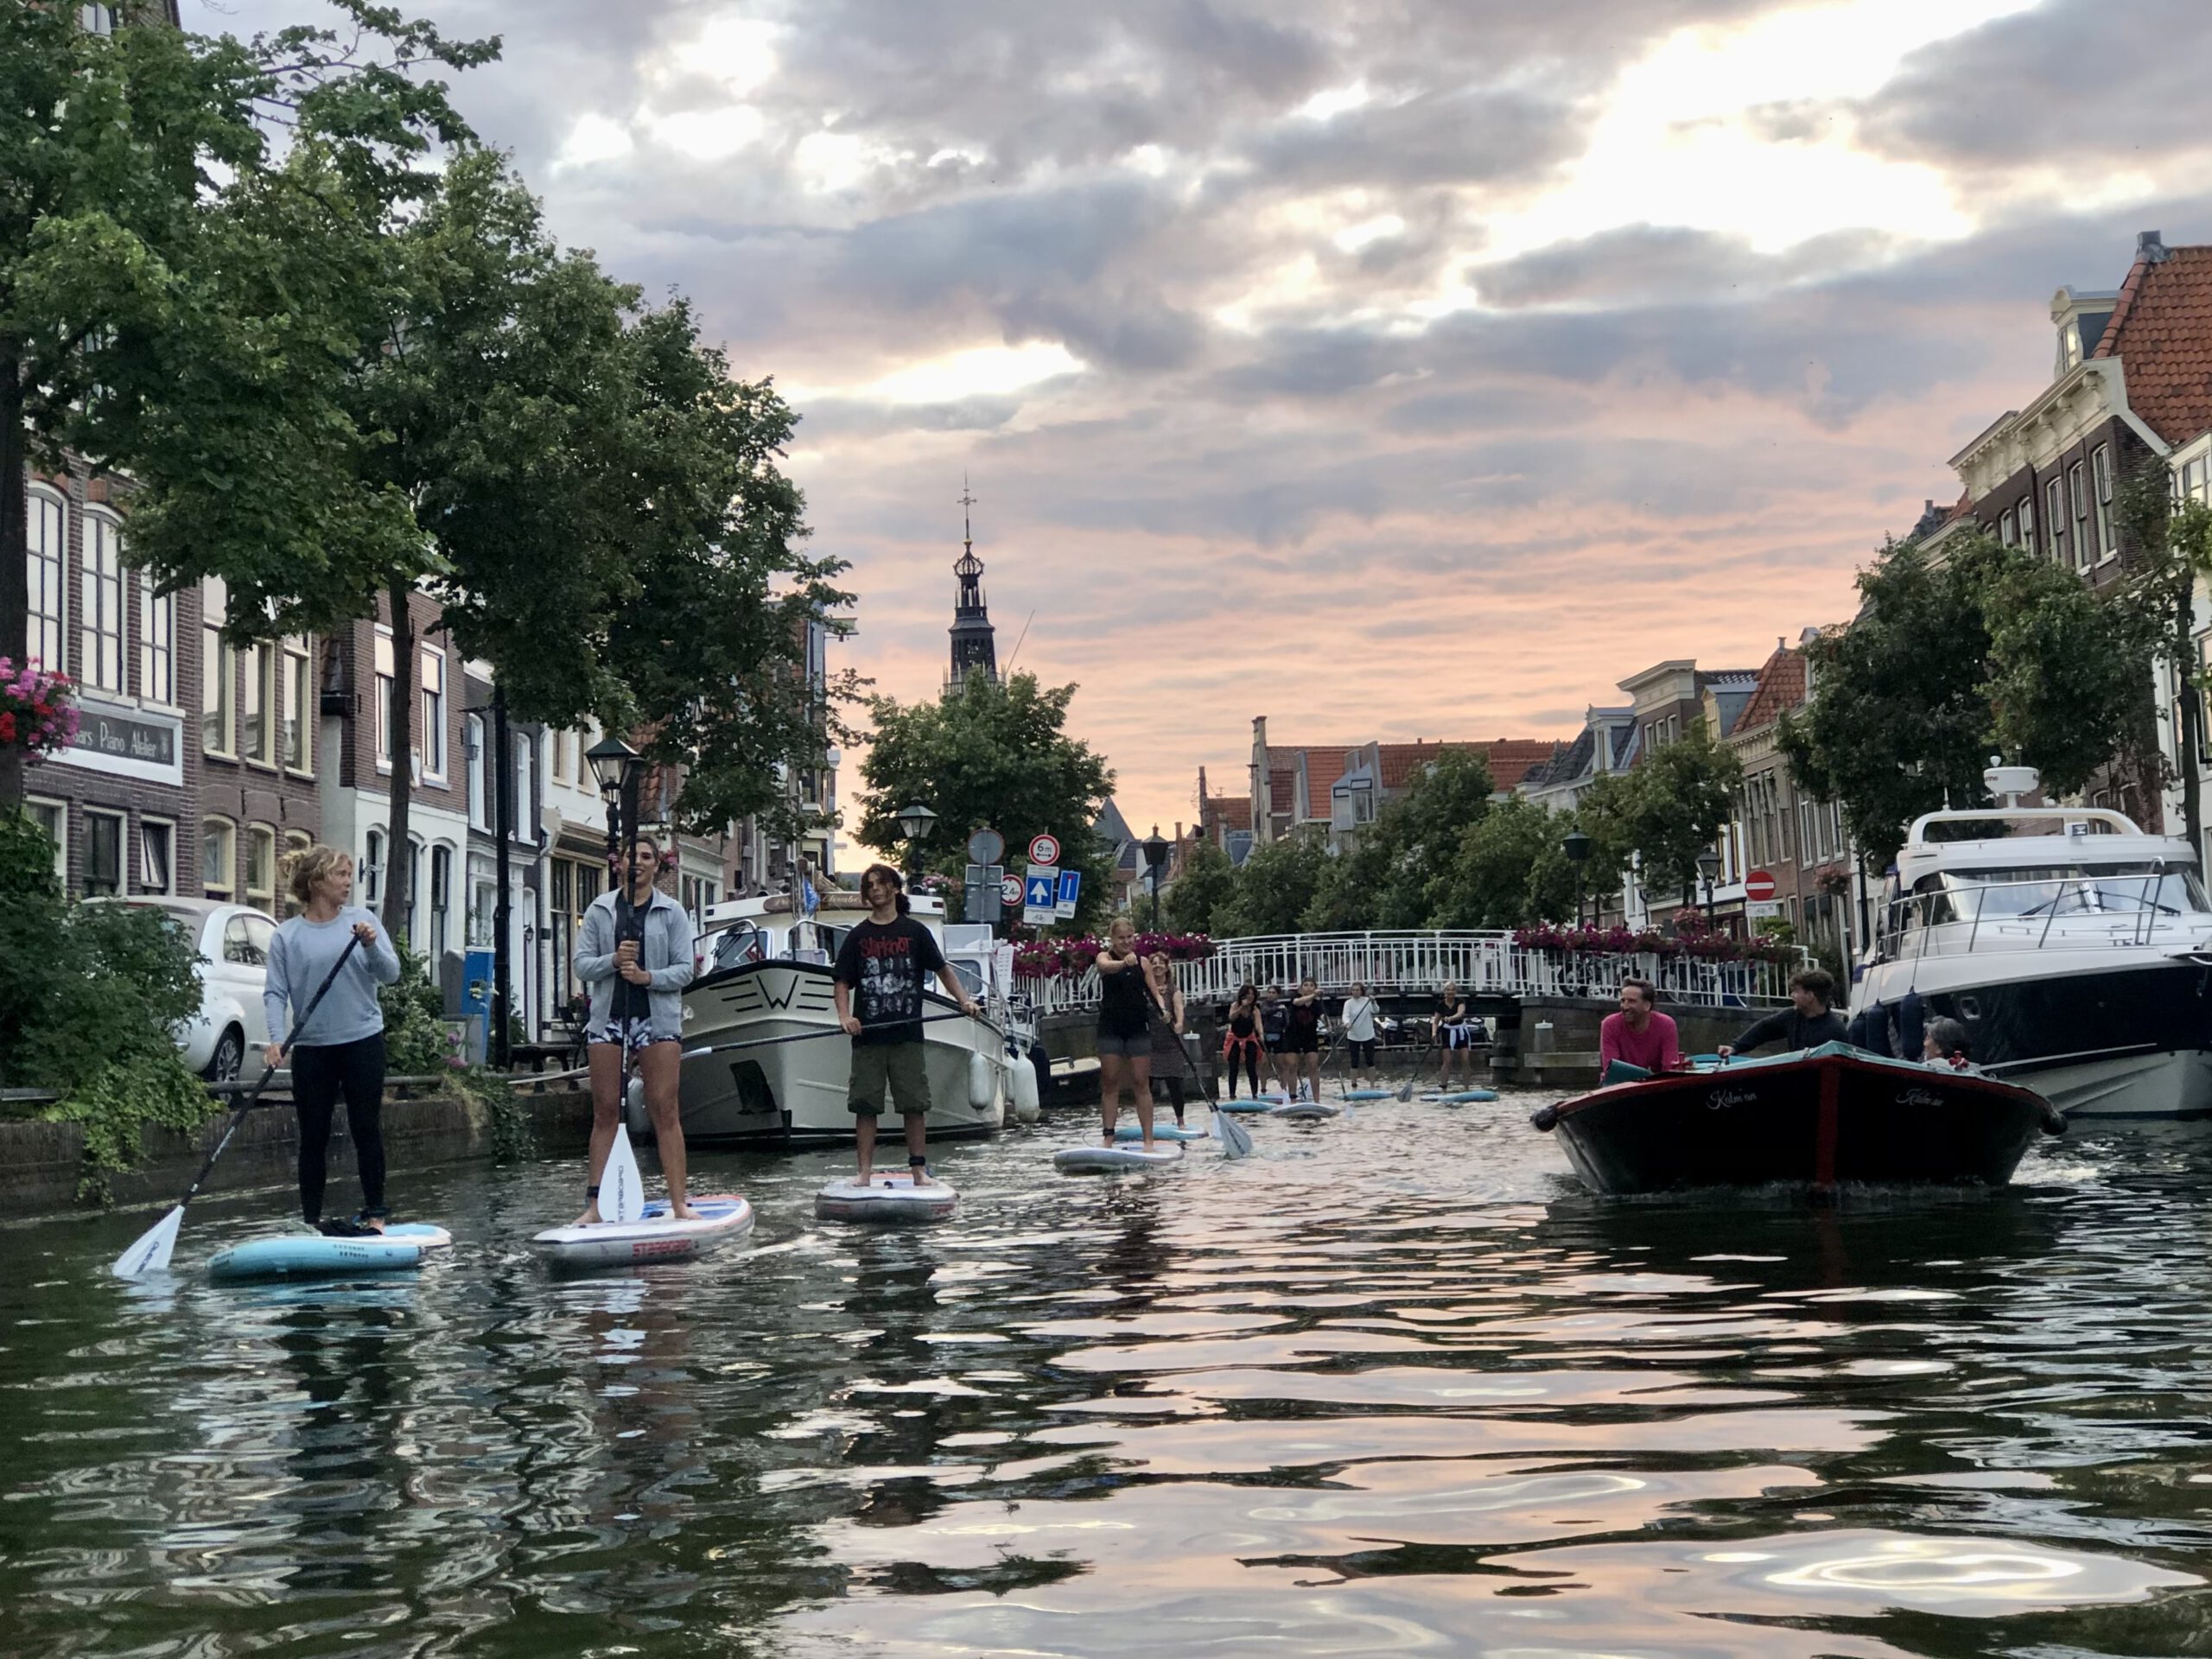 Stand up paddle board huren in Alkmaar en paddle like a local sup en zero waste community